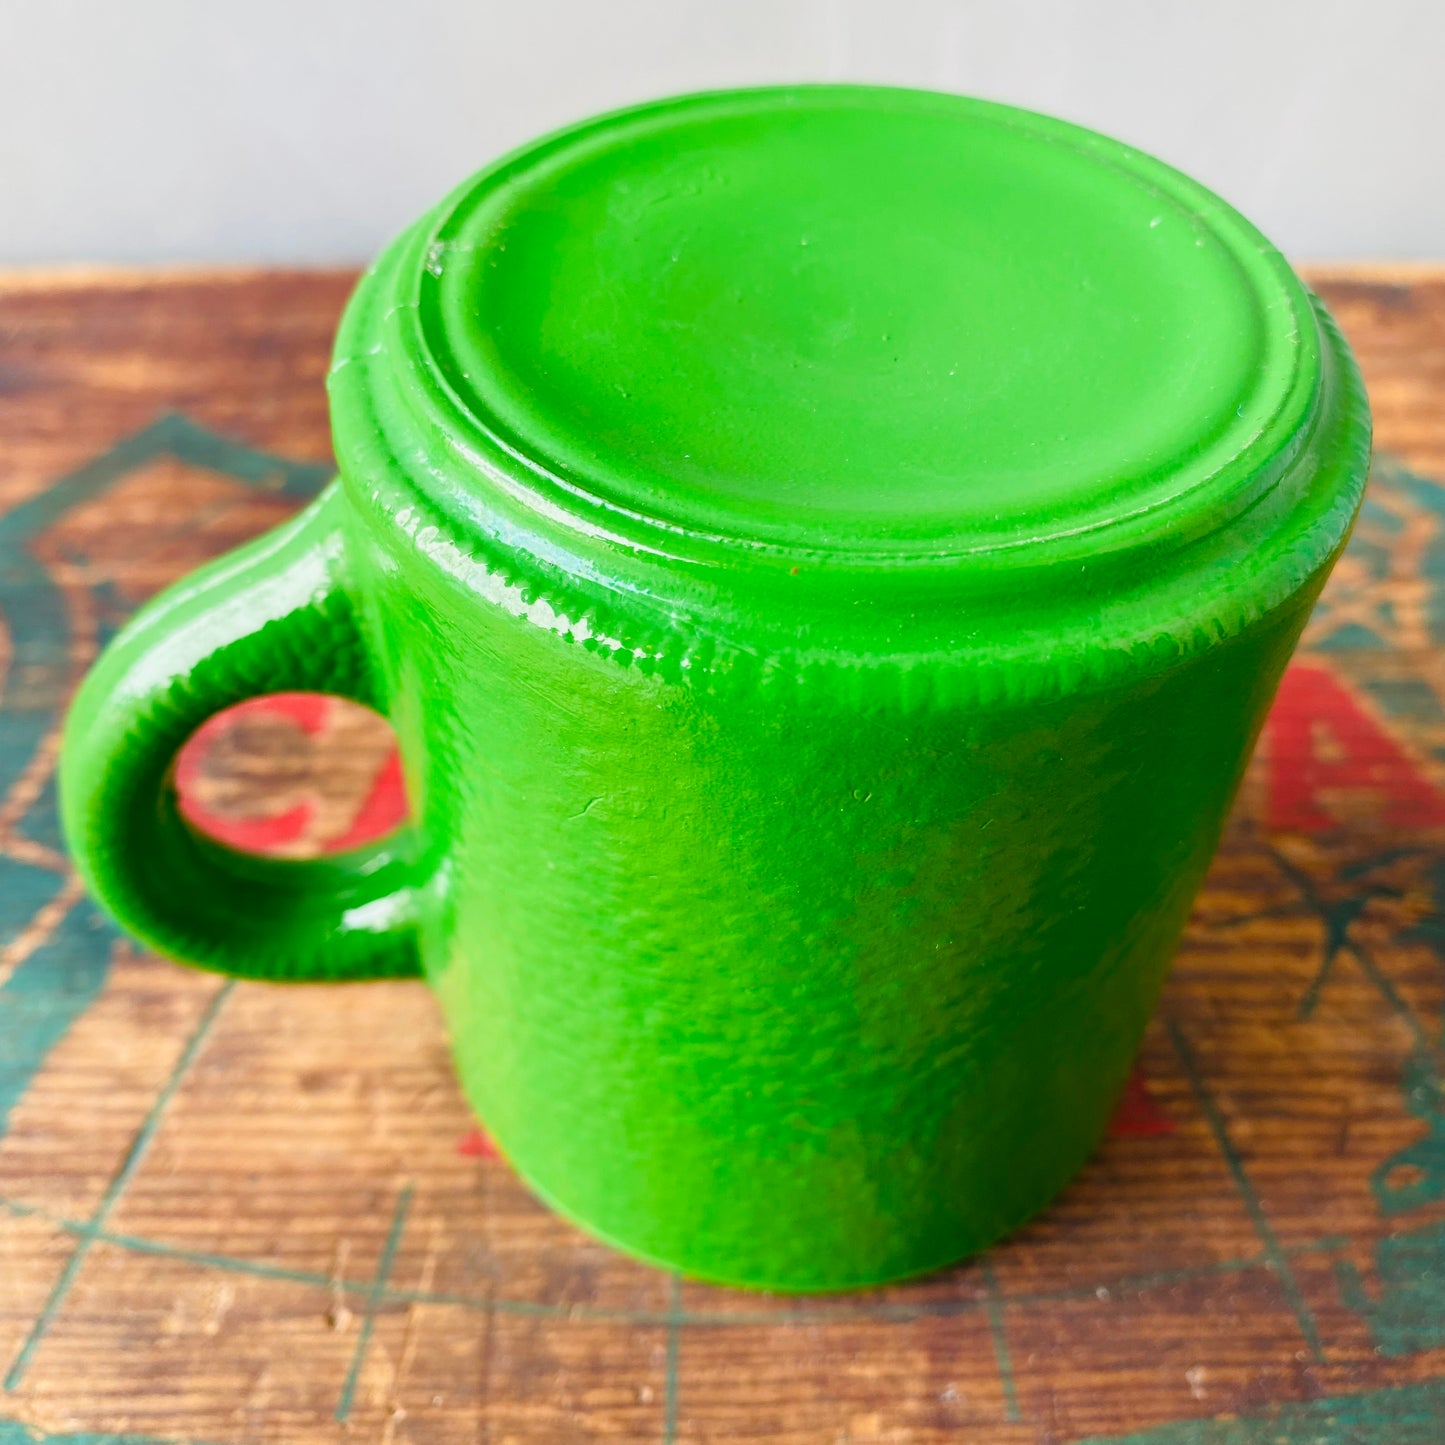 【USA vintage】Hazel Atlas mug Green